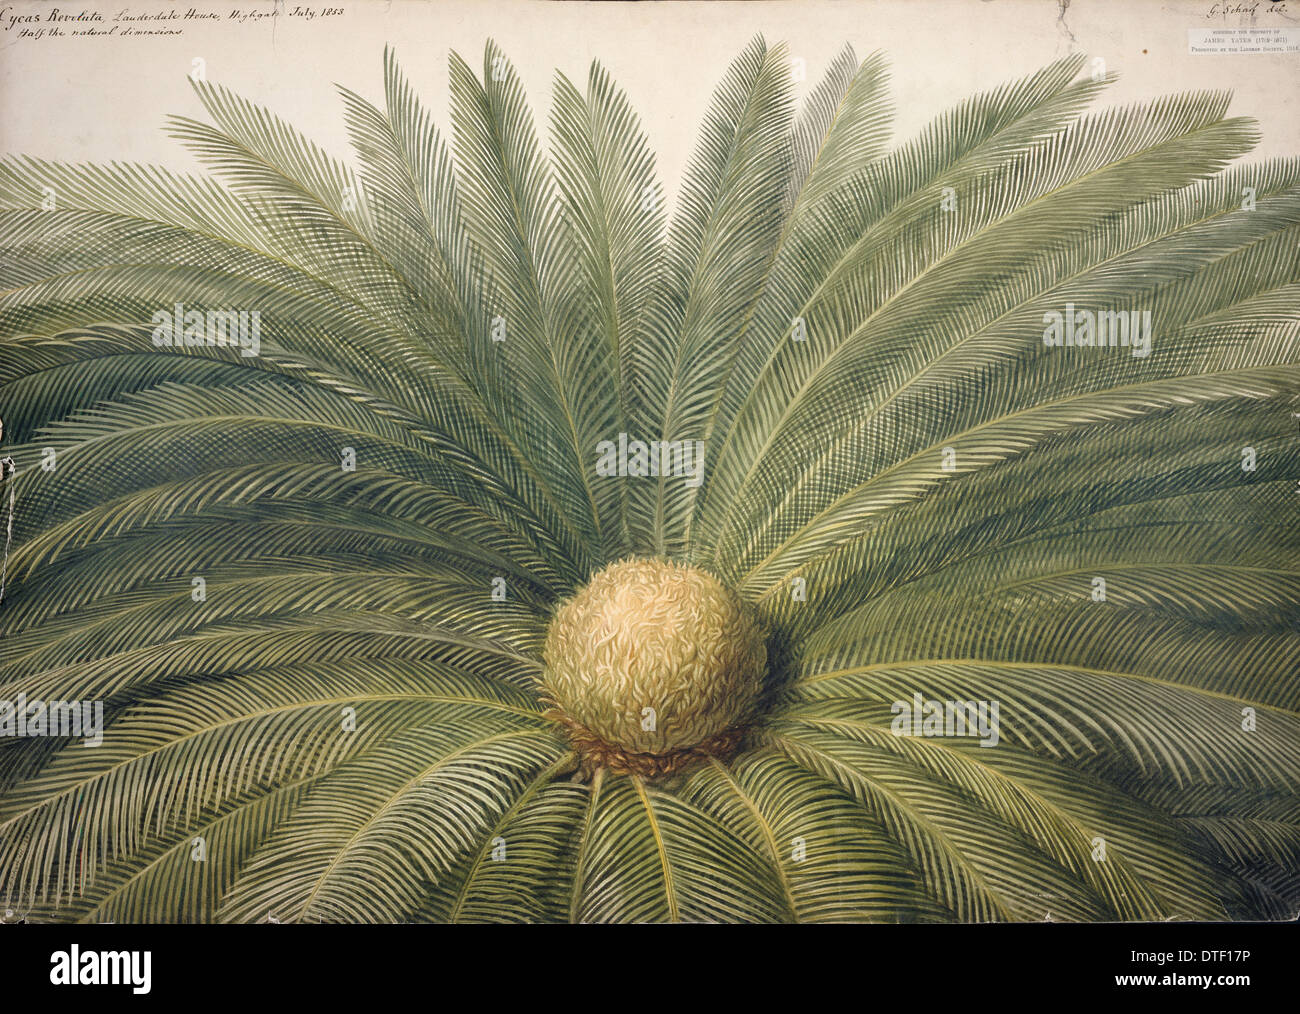 Cycas revoluta, sago palm Stock Photo